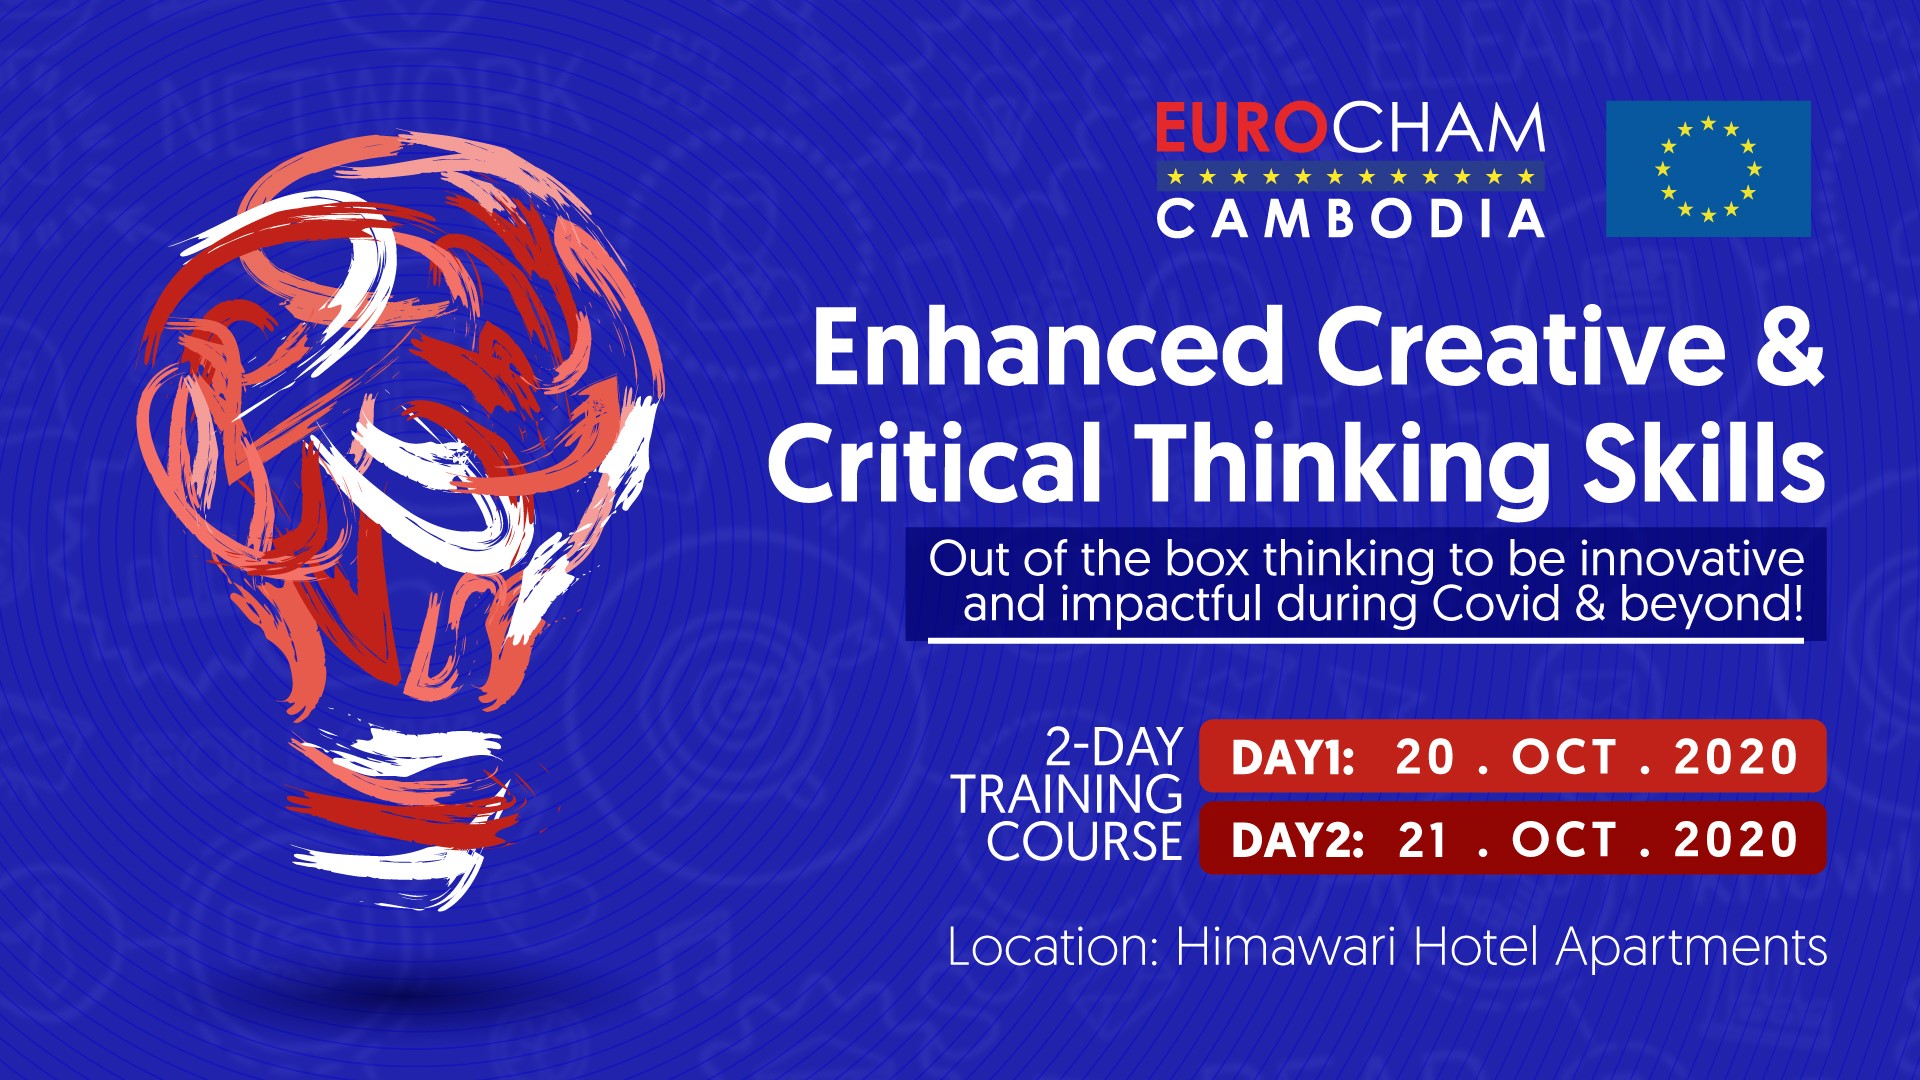 EuroCham Cambodia invites to creative thinking workshop on 20-21 Oct